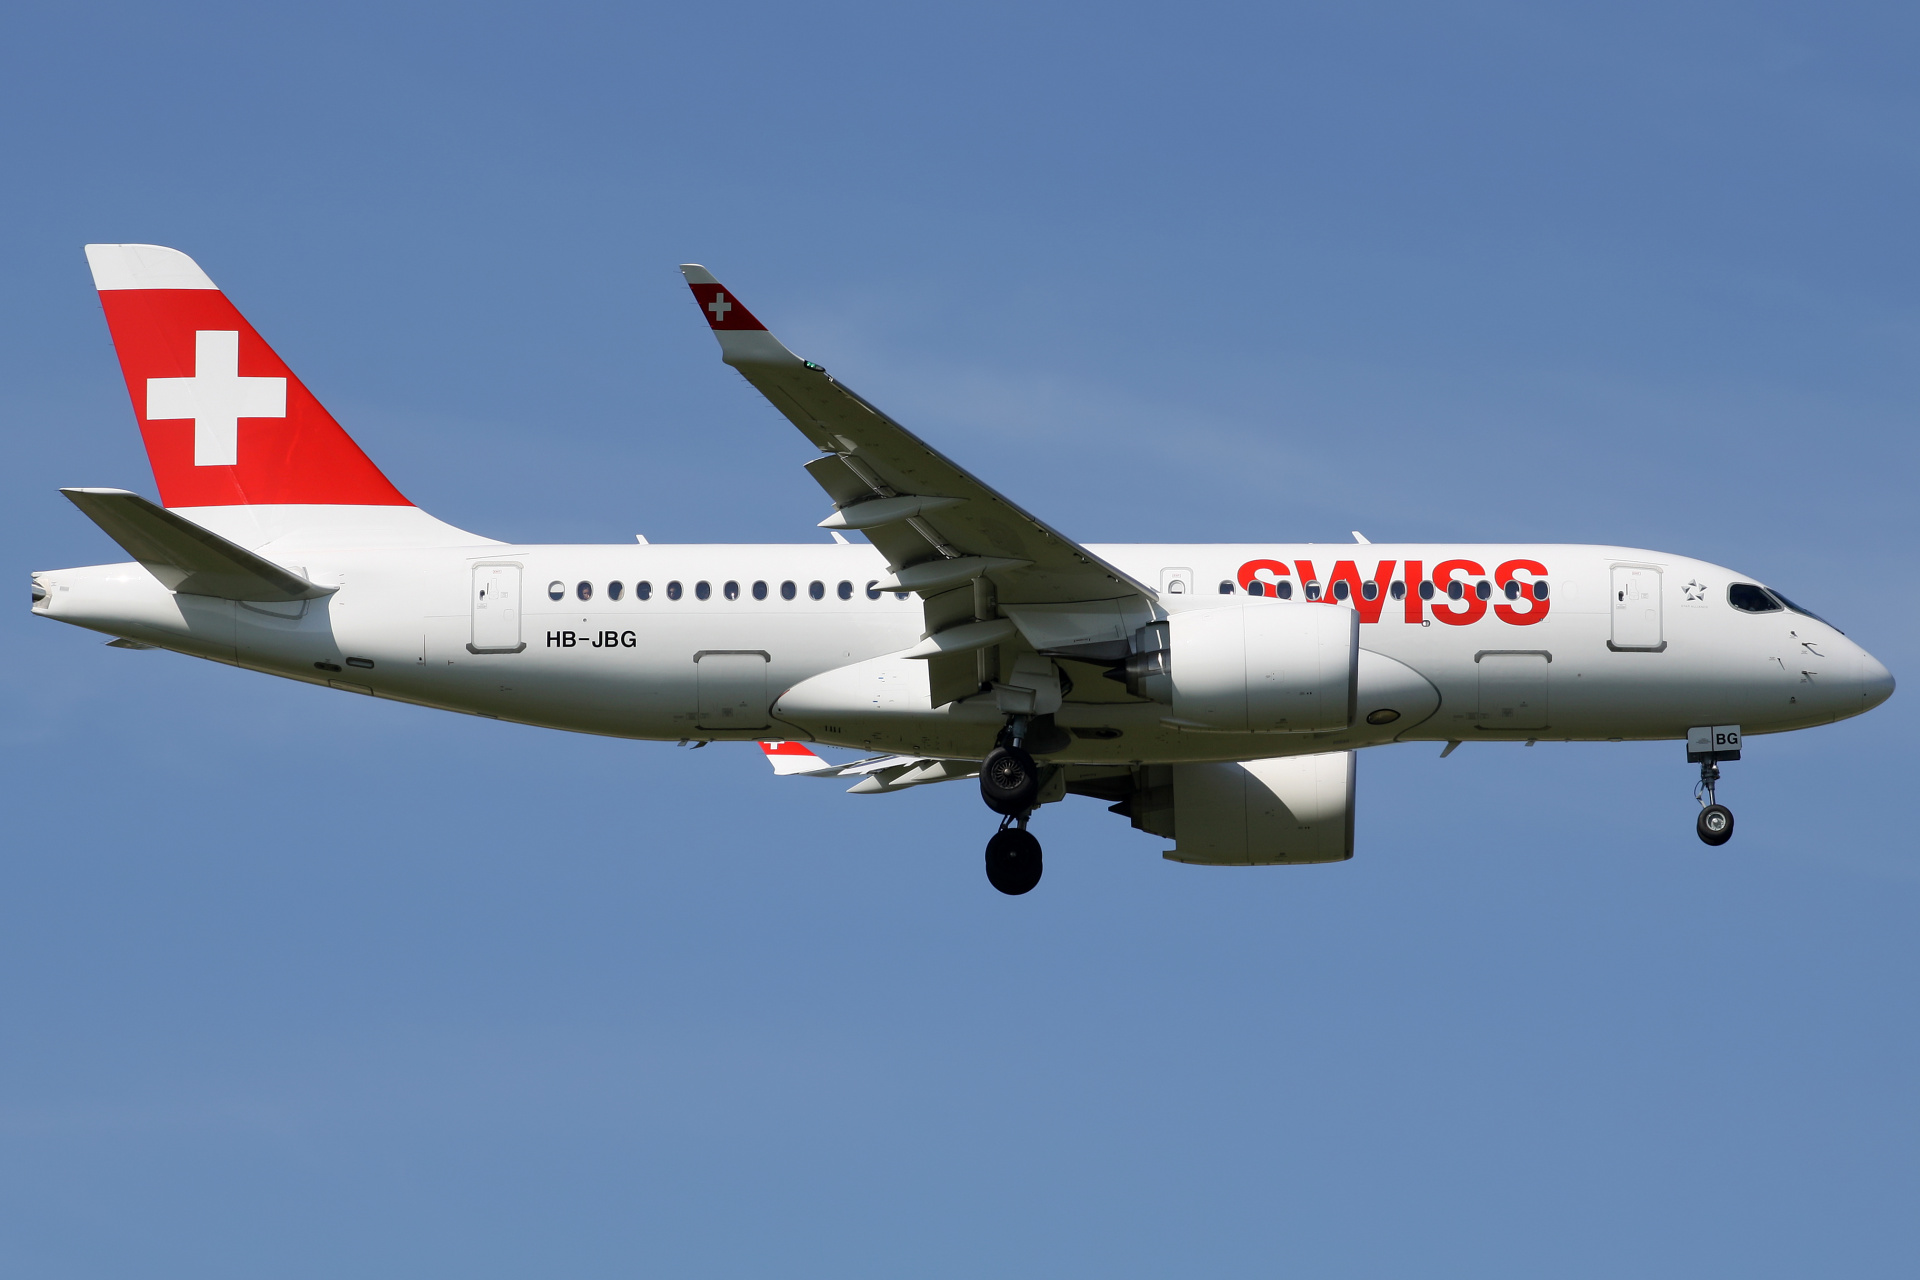 HB-JBG (Aircraft » EPWA Spotting » Airbus A220-100 » Swiss International Air Lines)